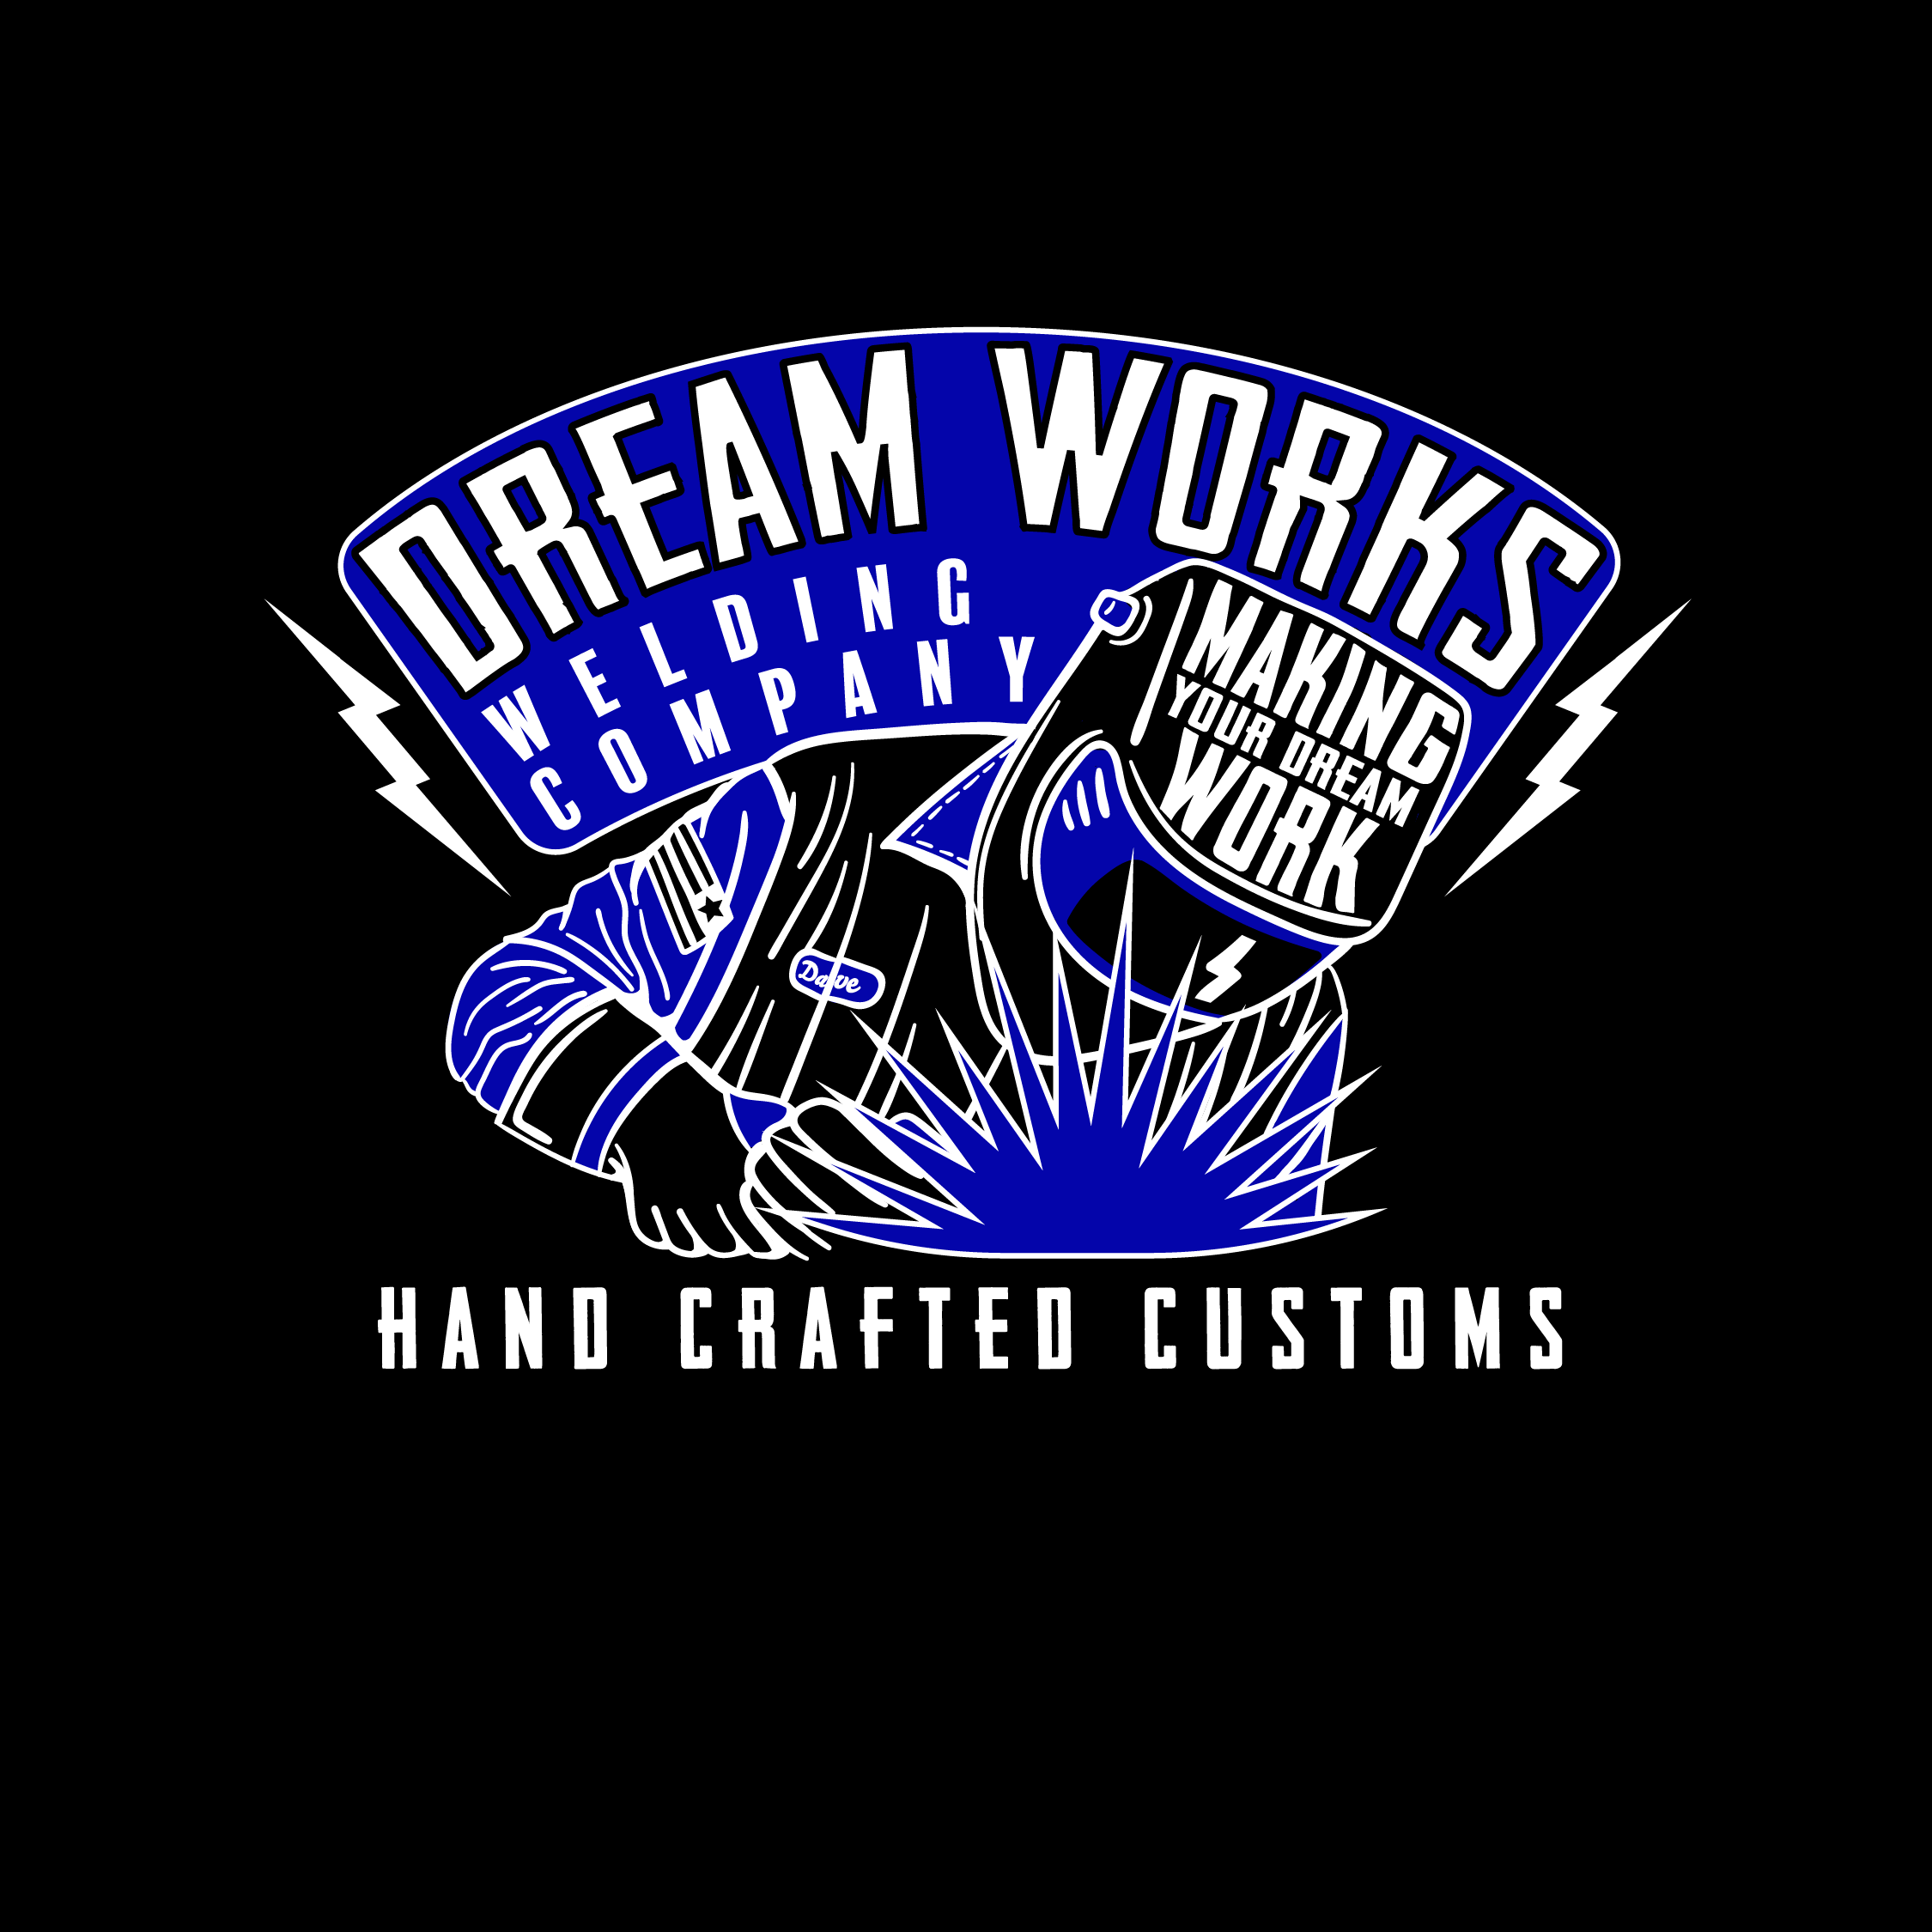 Dream Works Welding Company, LLC Logo